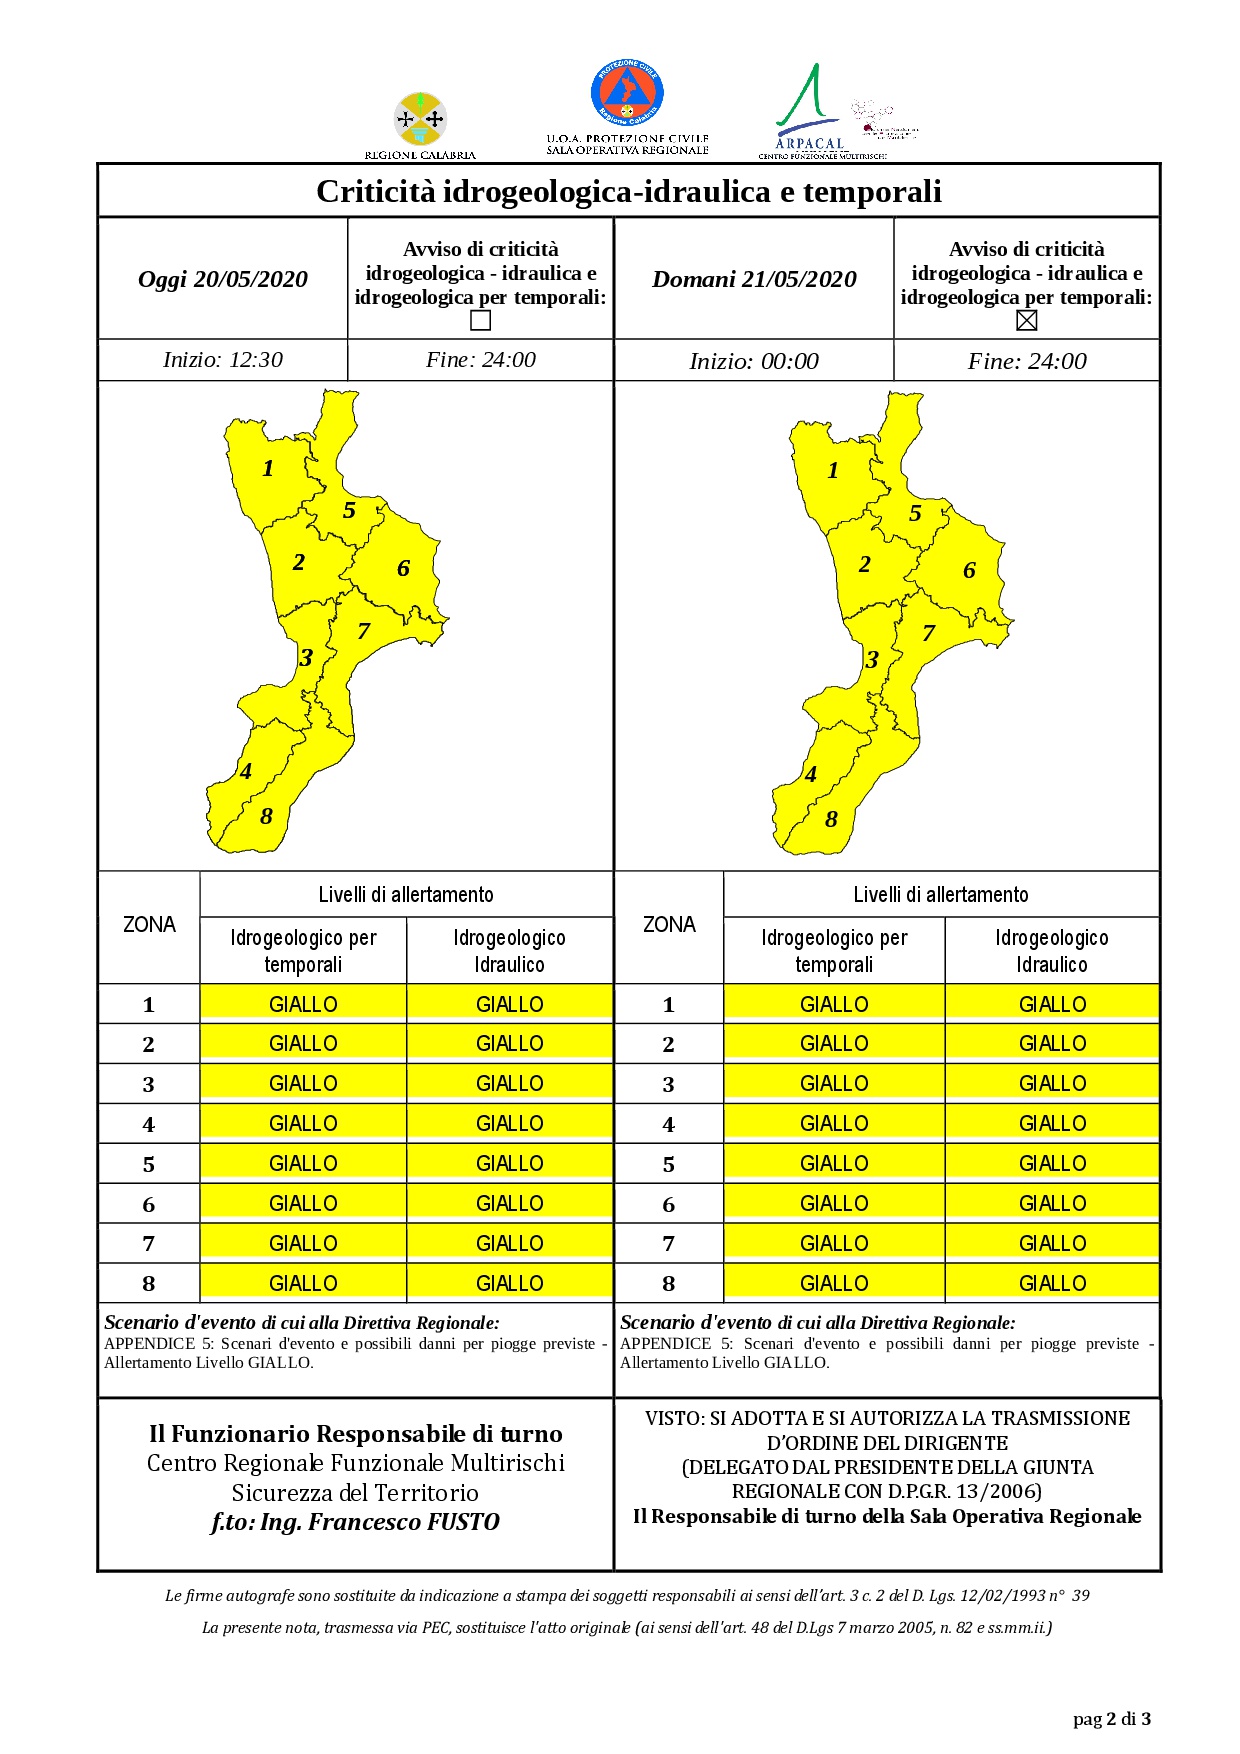 Criticità idrogeologica-idraulica e temporali in Calabria 20-05-2020